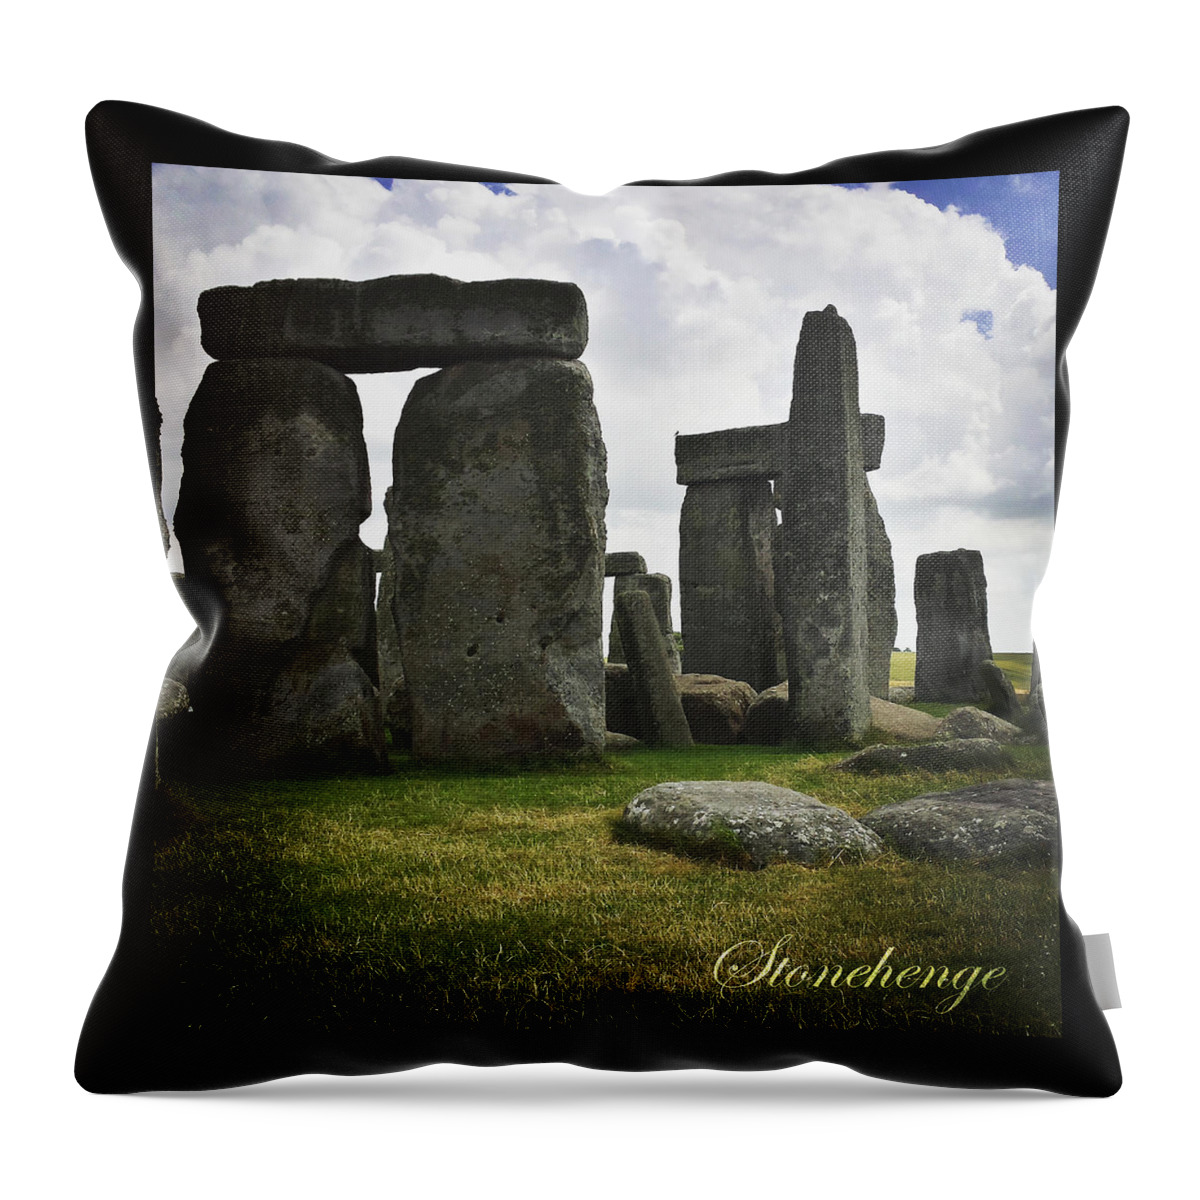 Ireland Throw Pillow featuring the photograph Stonehenge Ireland by Joelle Philibert